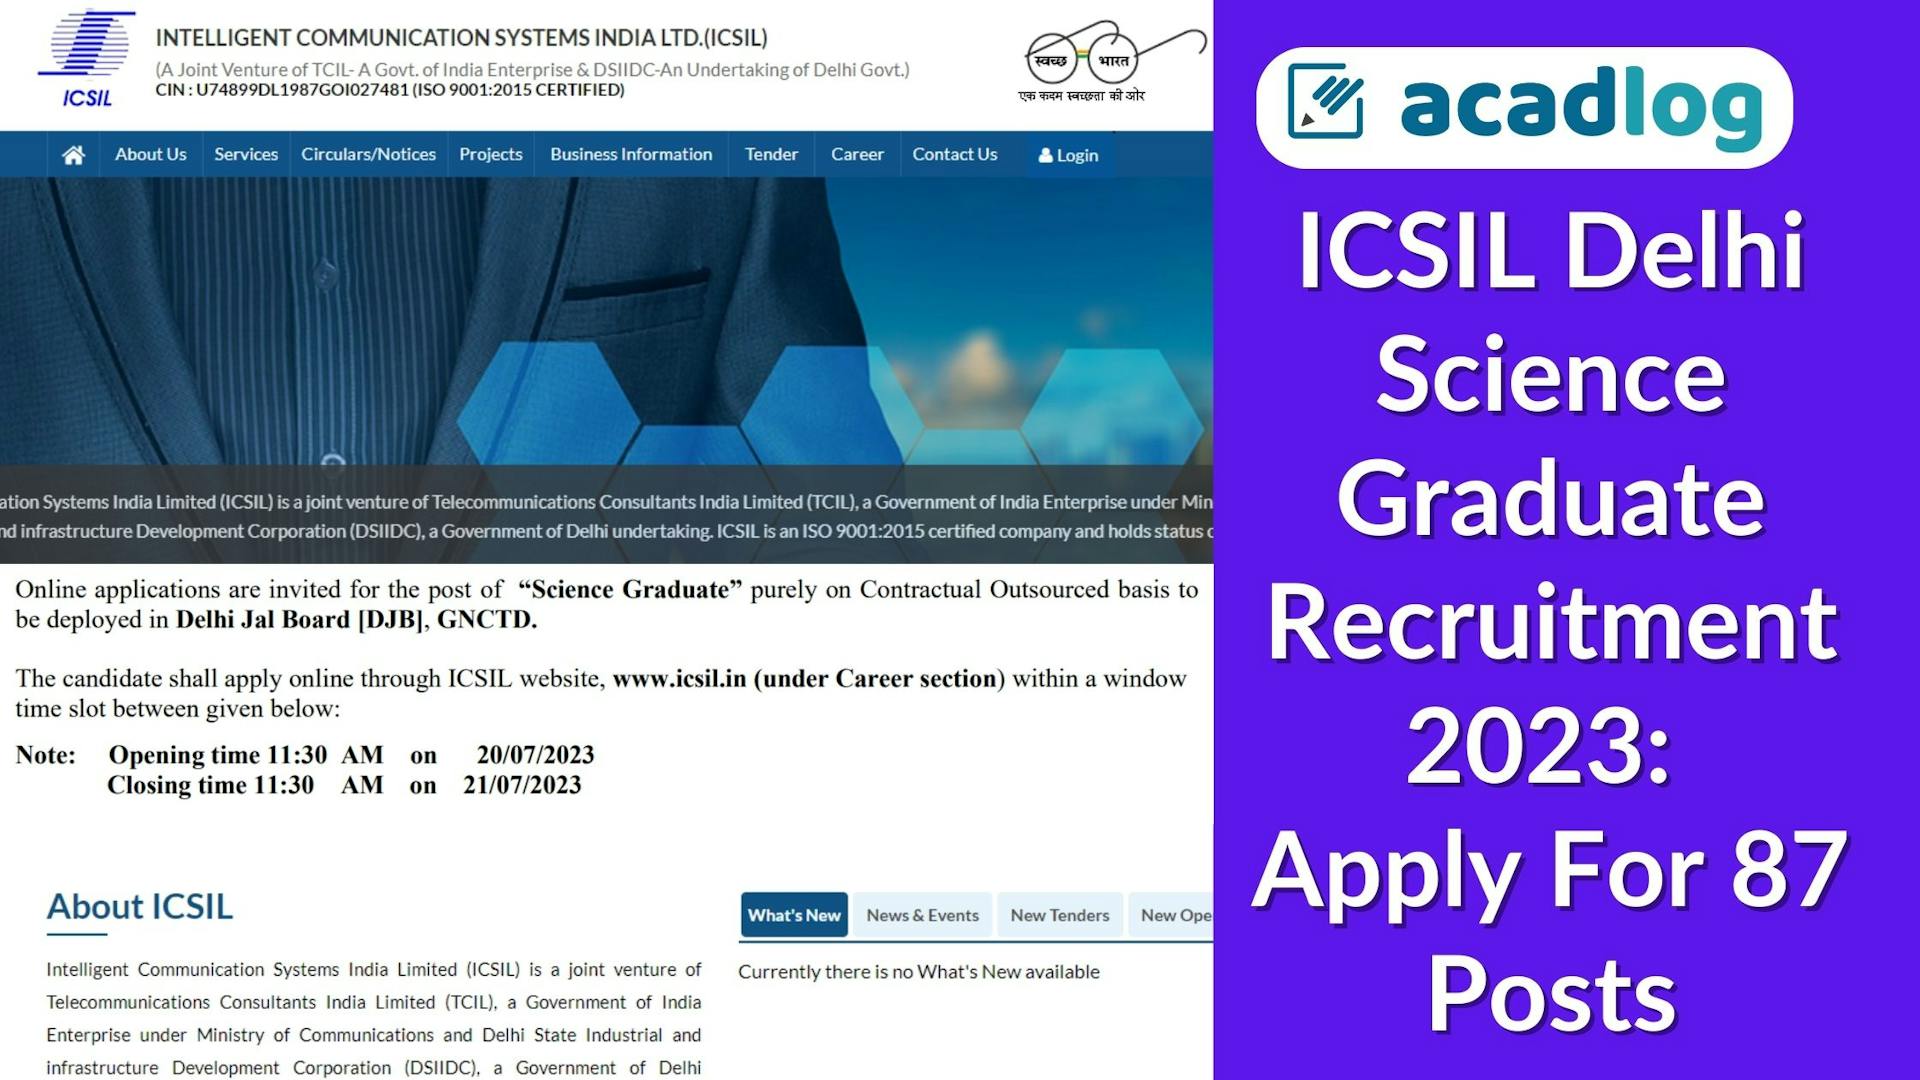 ICSIL Delhi Science Graduate Recruitment 2023: Apply For 87 Posts